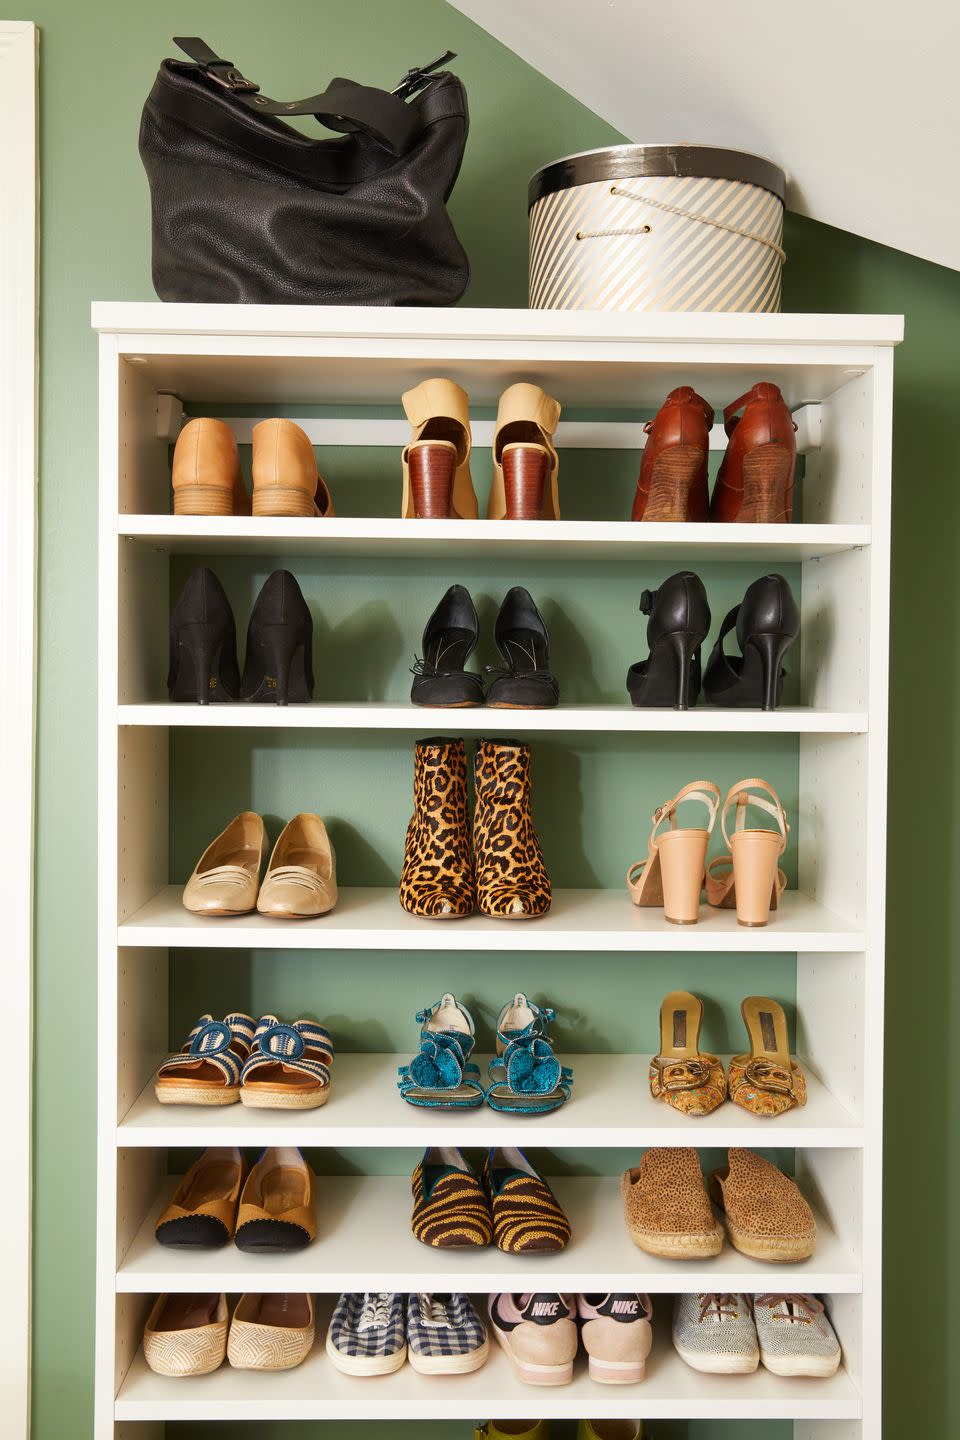 a shelf with shoes